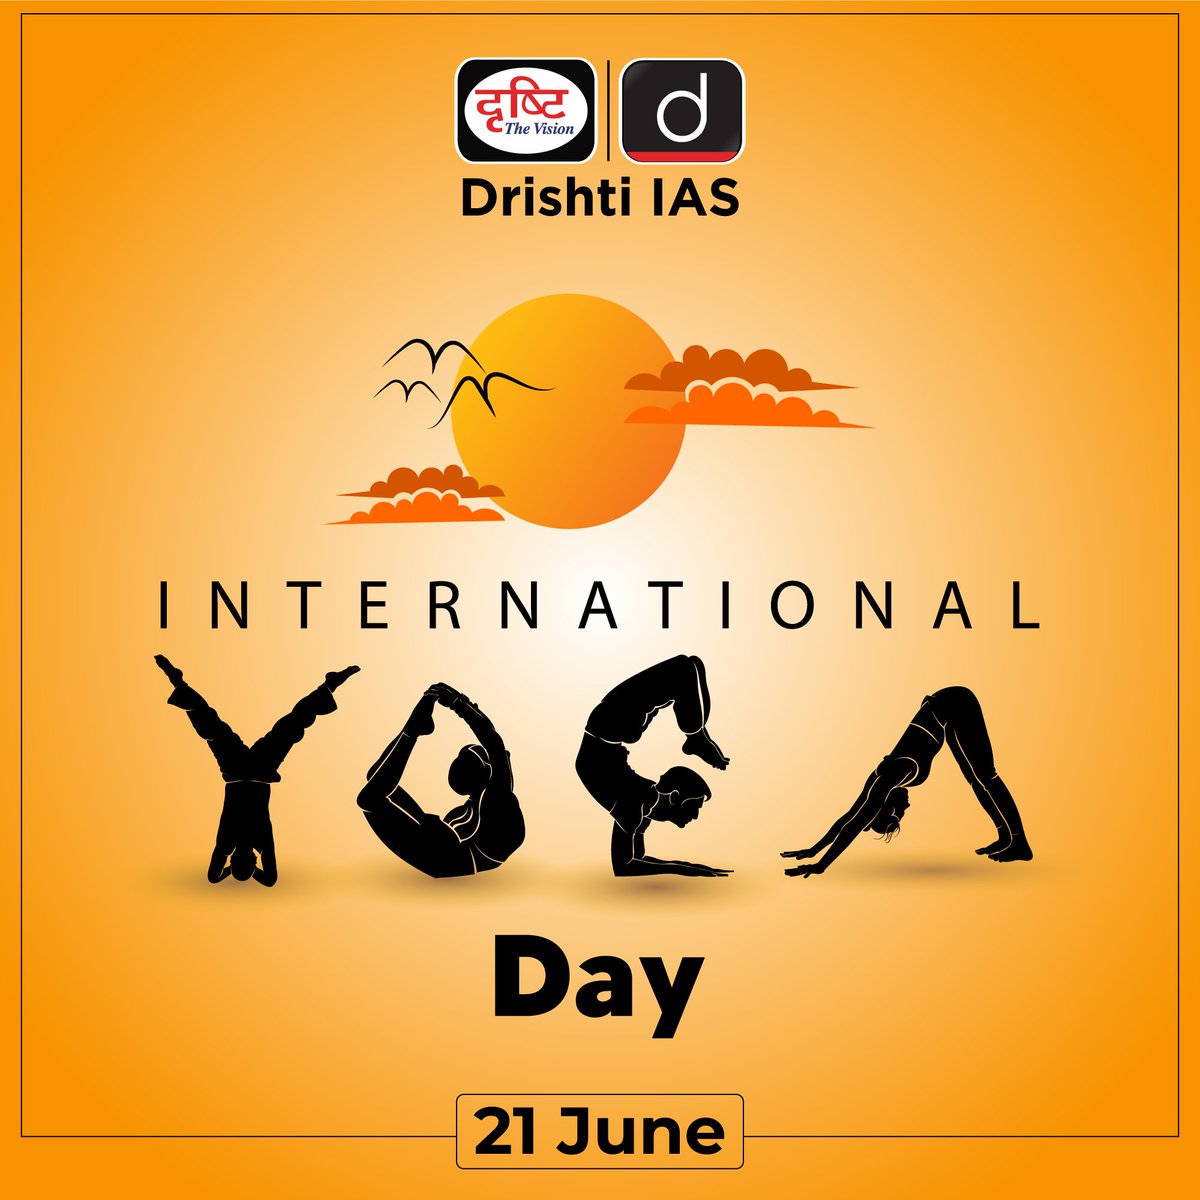 अंतर्राष्ट्रीय योग दिवस...

#Internationalyogaday #Yogaday #YogainUN #Yogacapital #Indianheritage
#DrishtiIAS #DrishtiPCS